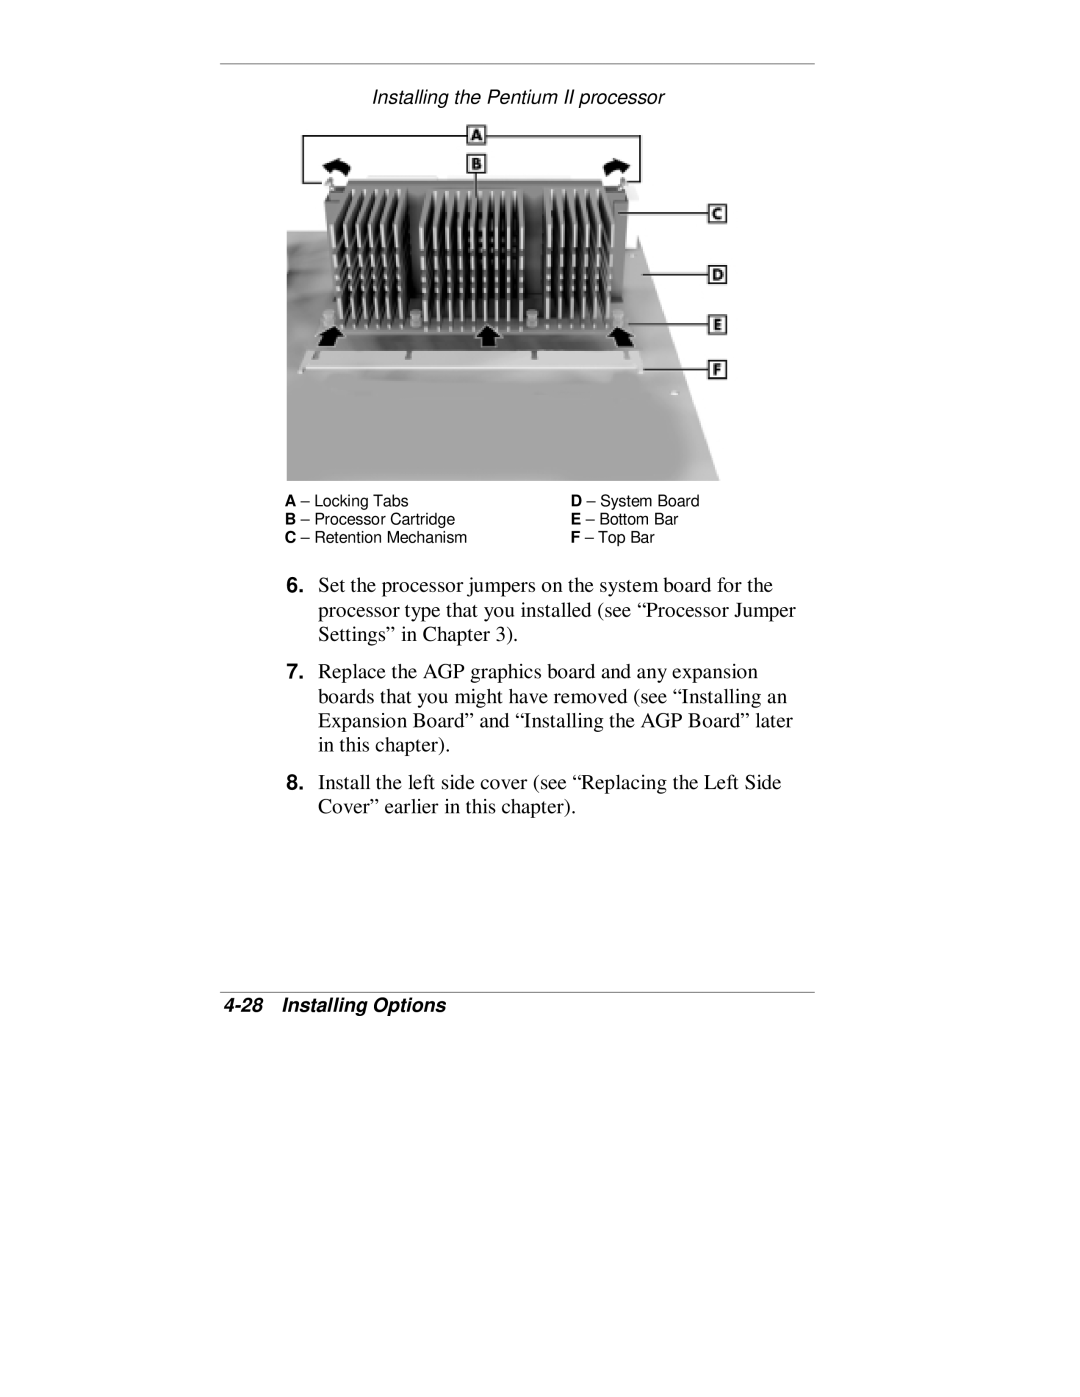 NEC VT 300 Series manual Installing the Pentium II processor, 4-28Installing Options 